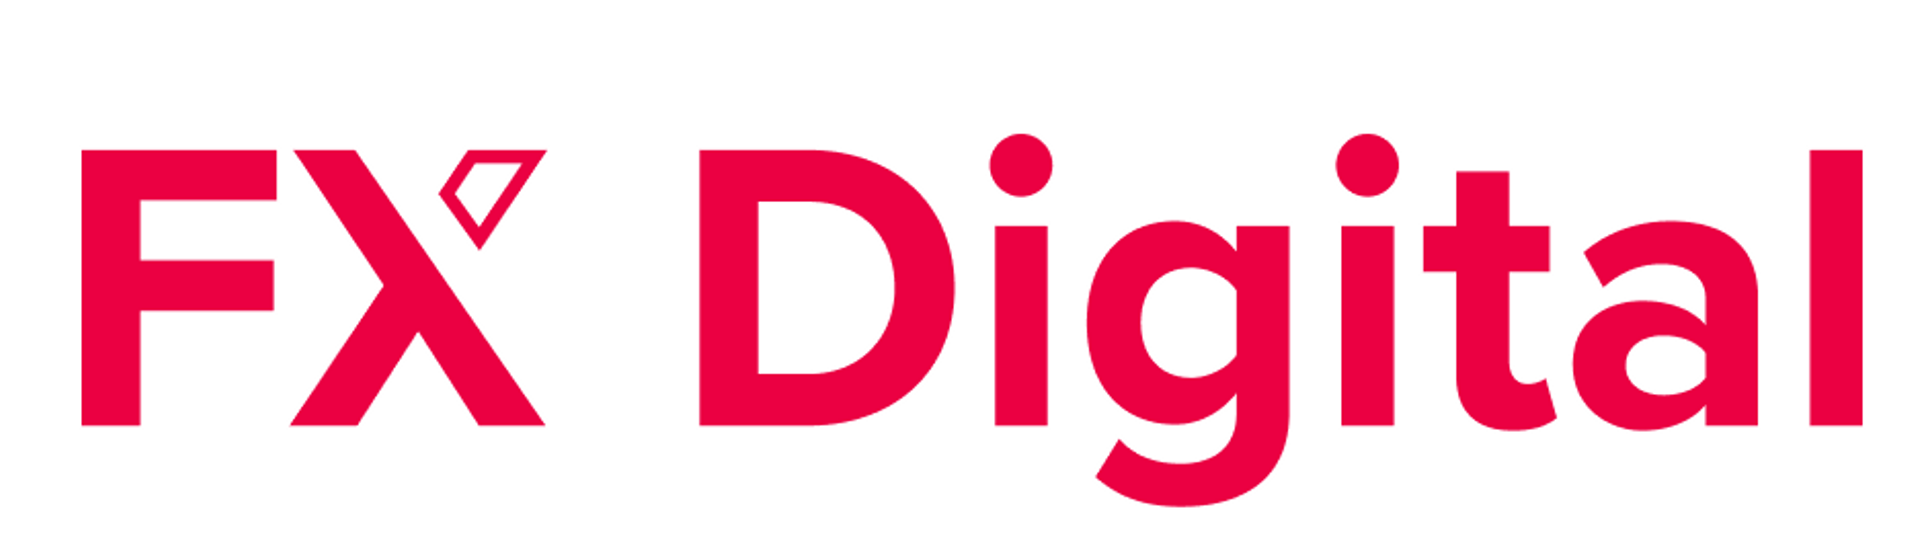 FX Digital logo